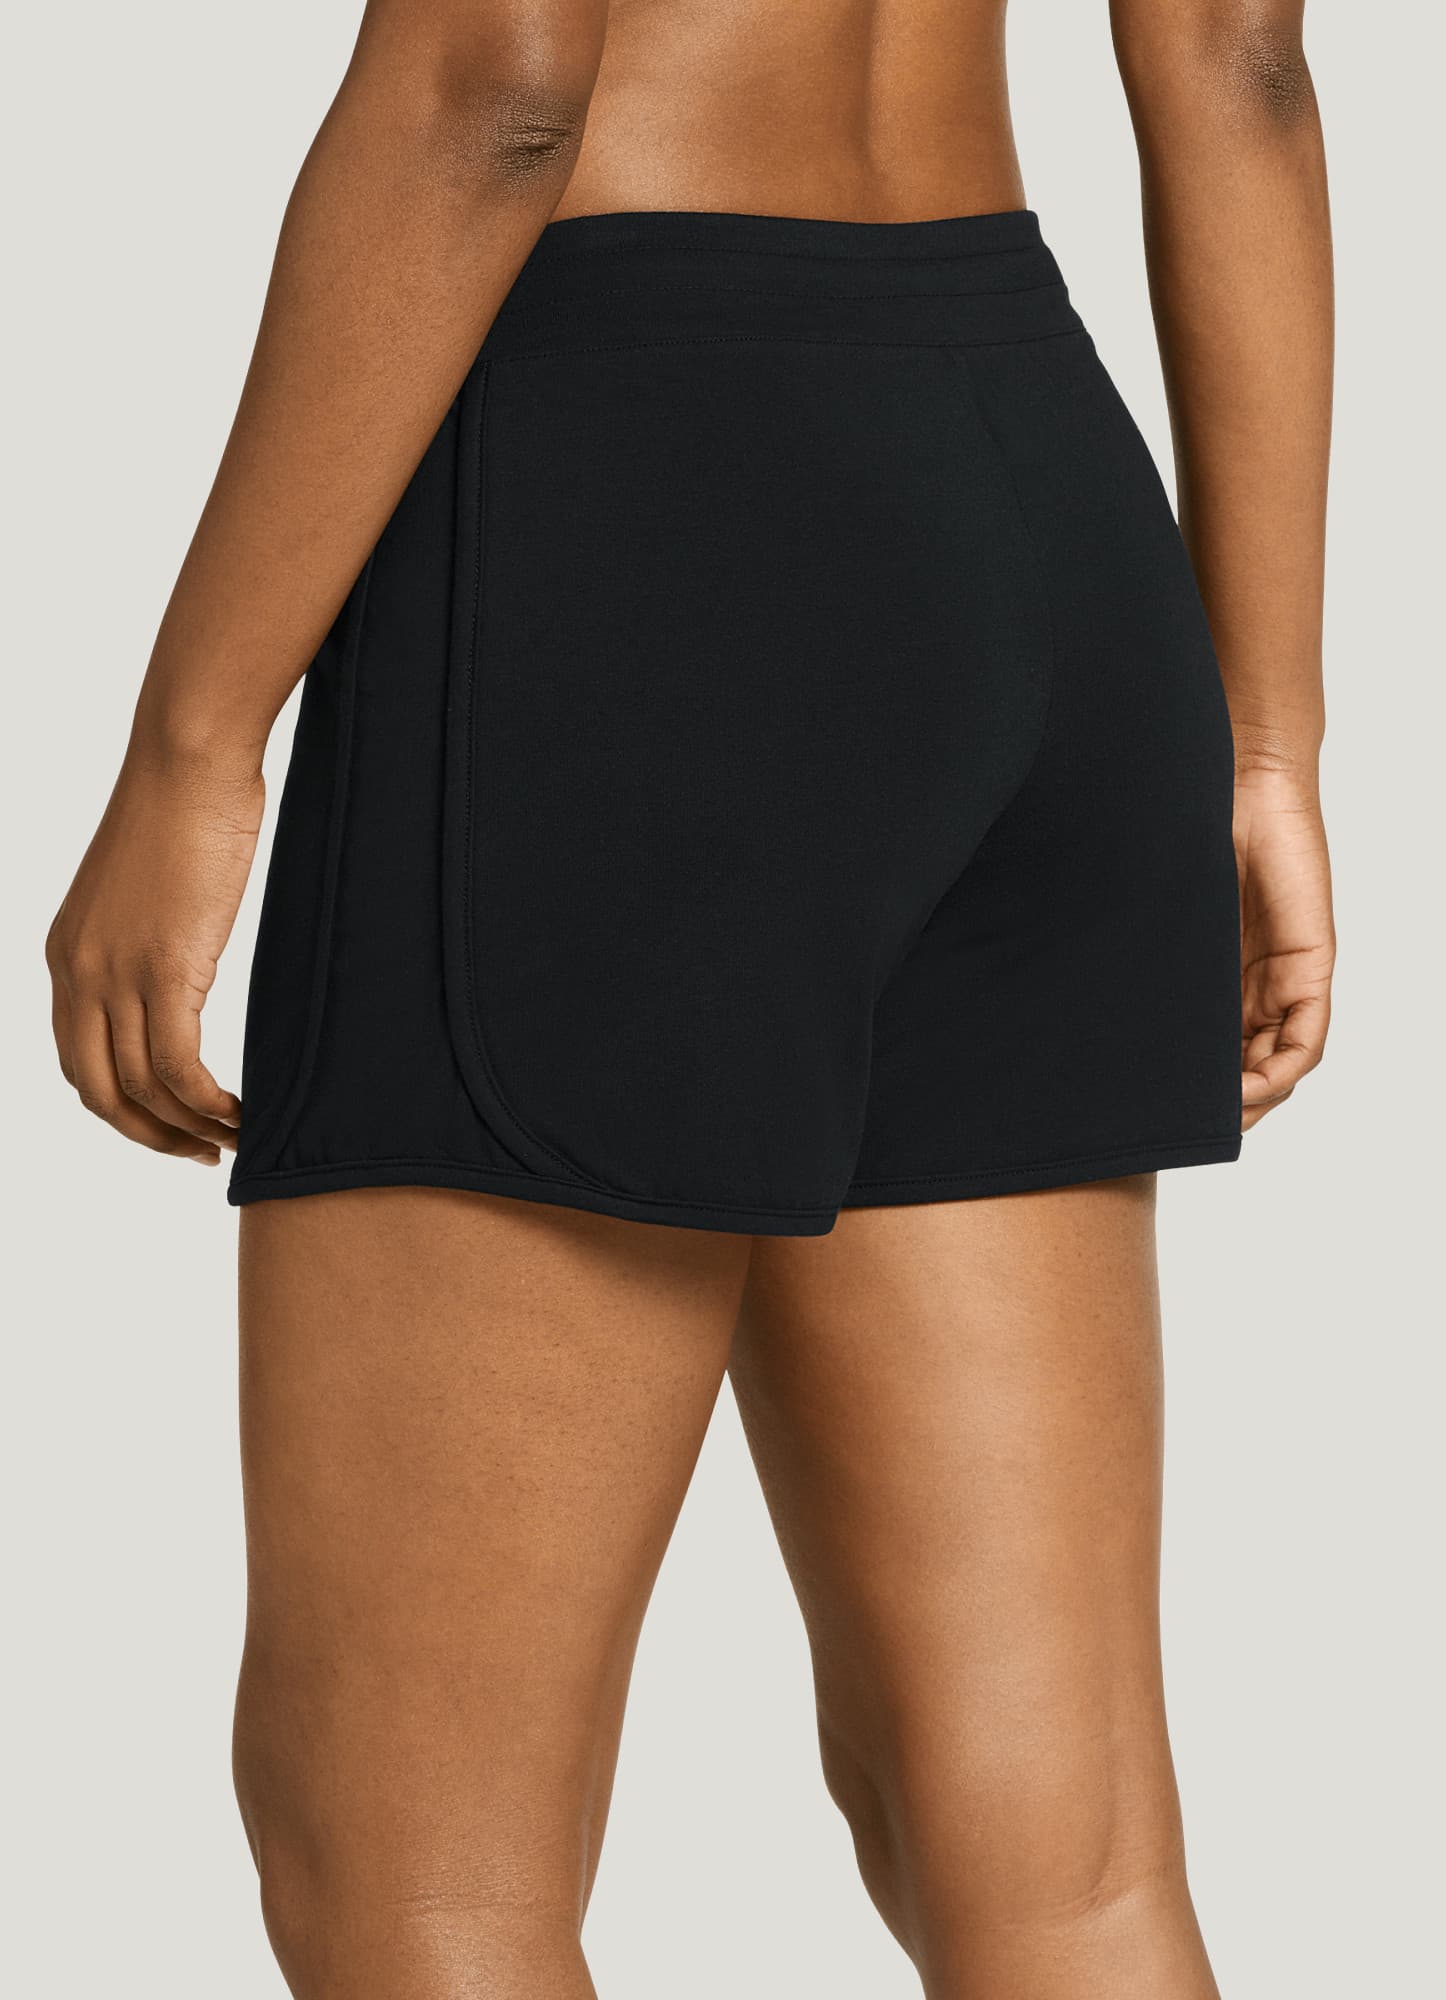 Danskin Now Color Block Solid Black Athletic Shorts Size X-Large